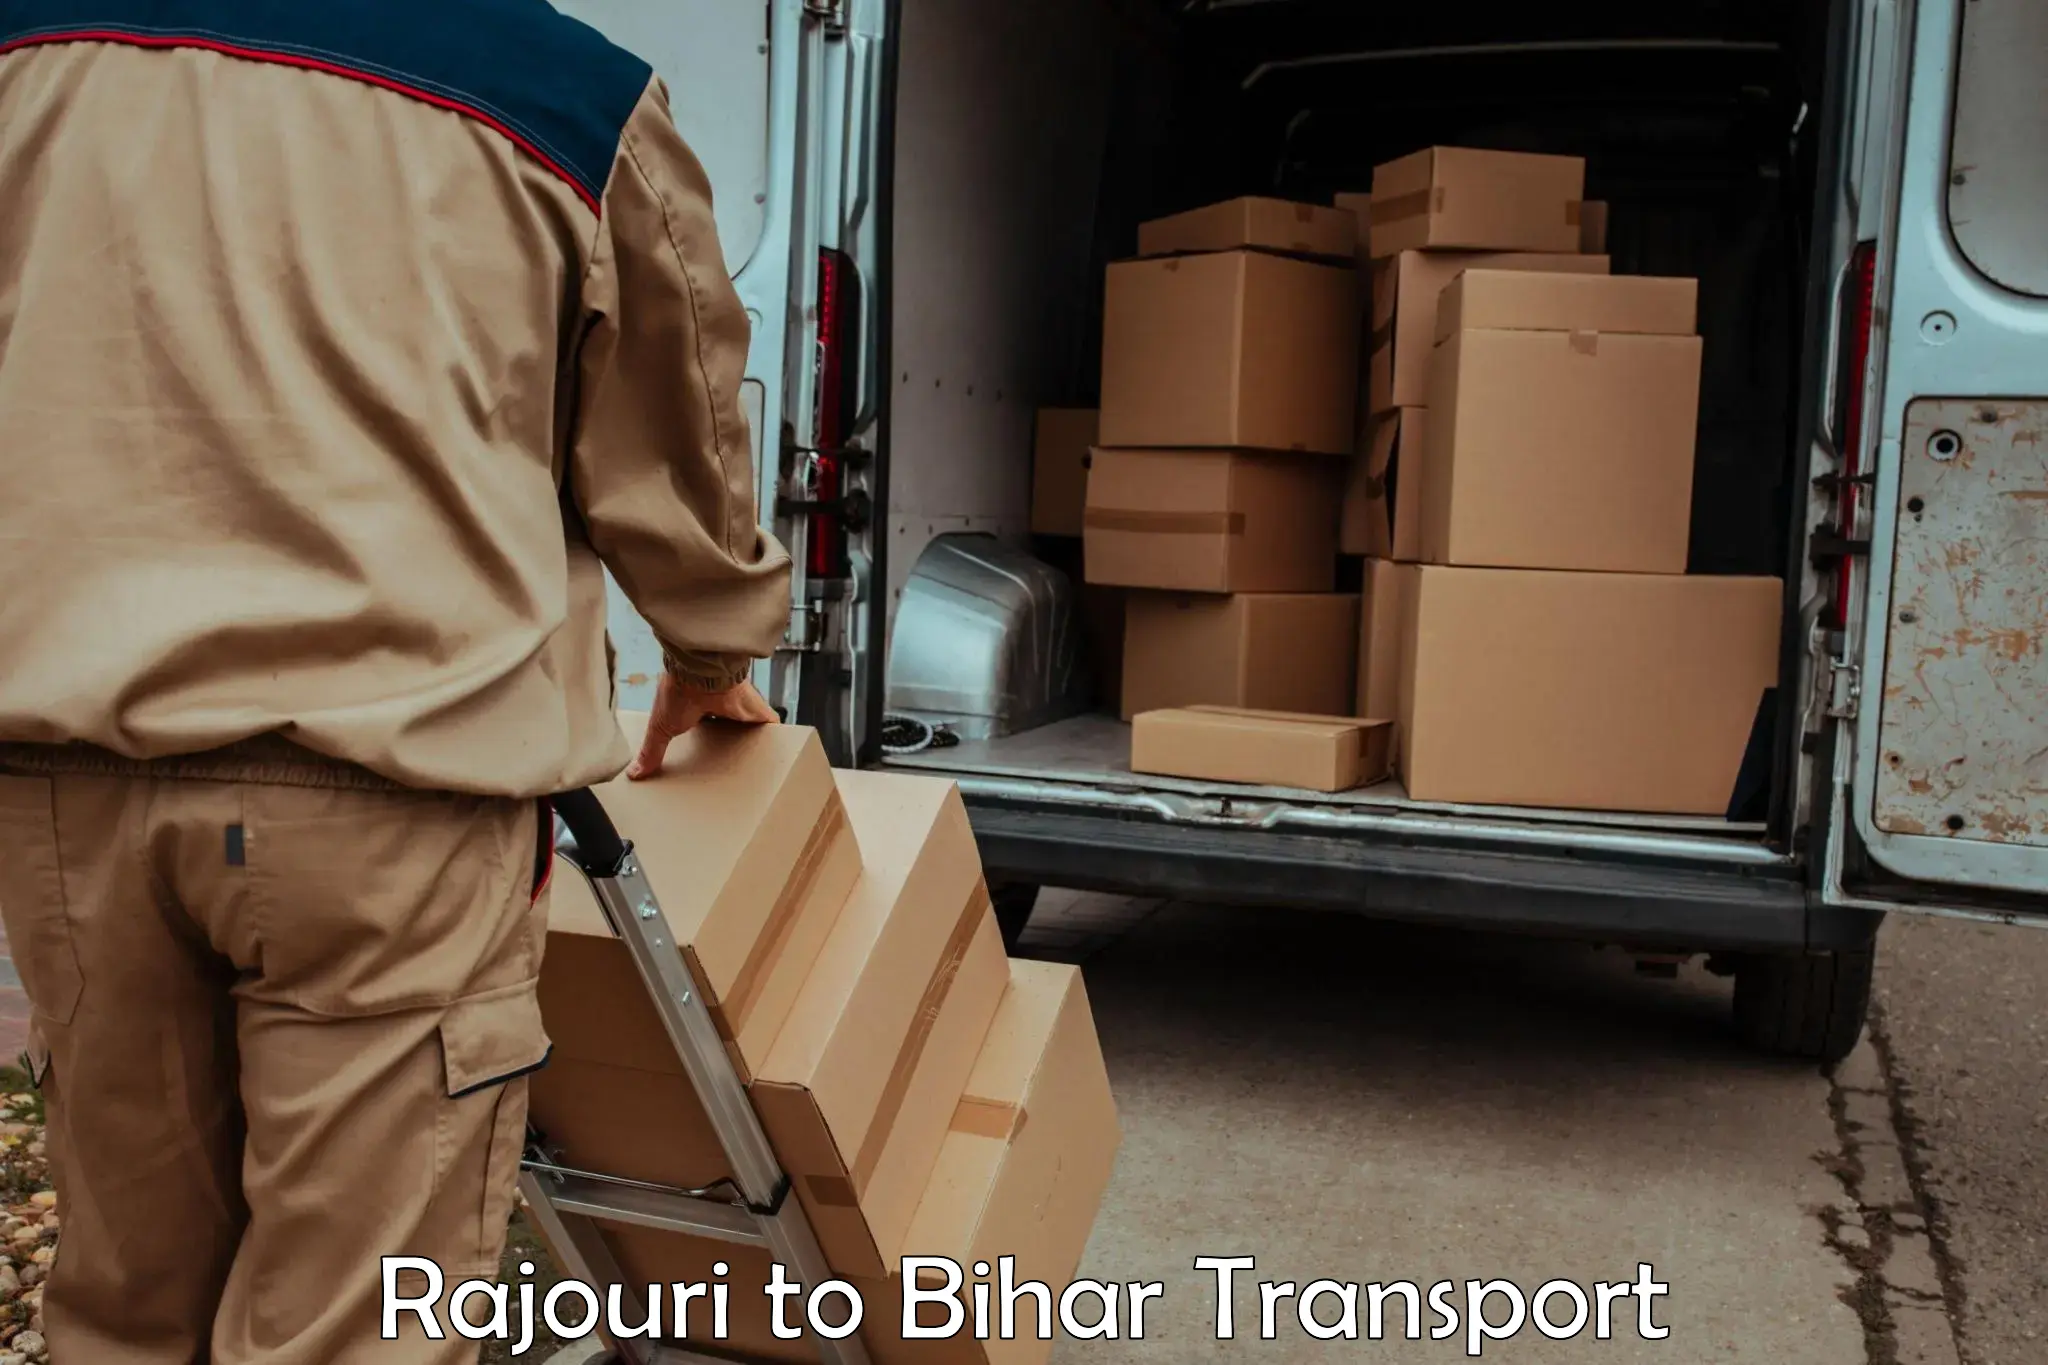 Goods delivery service Rajouri to Darbhanga